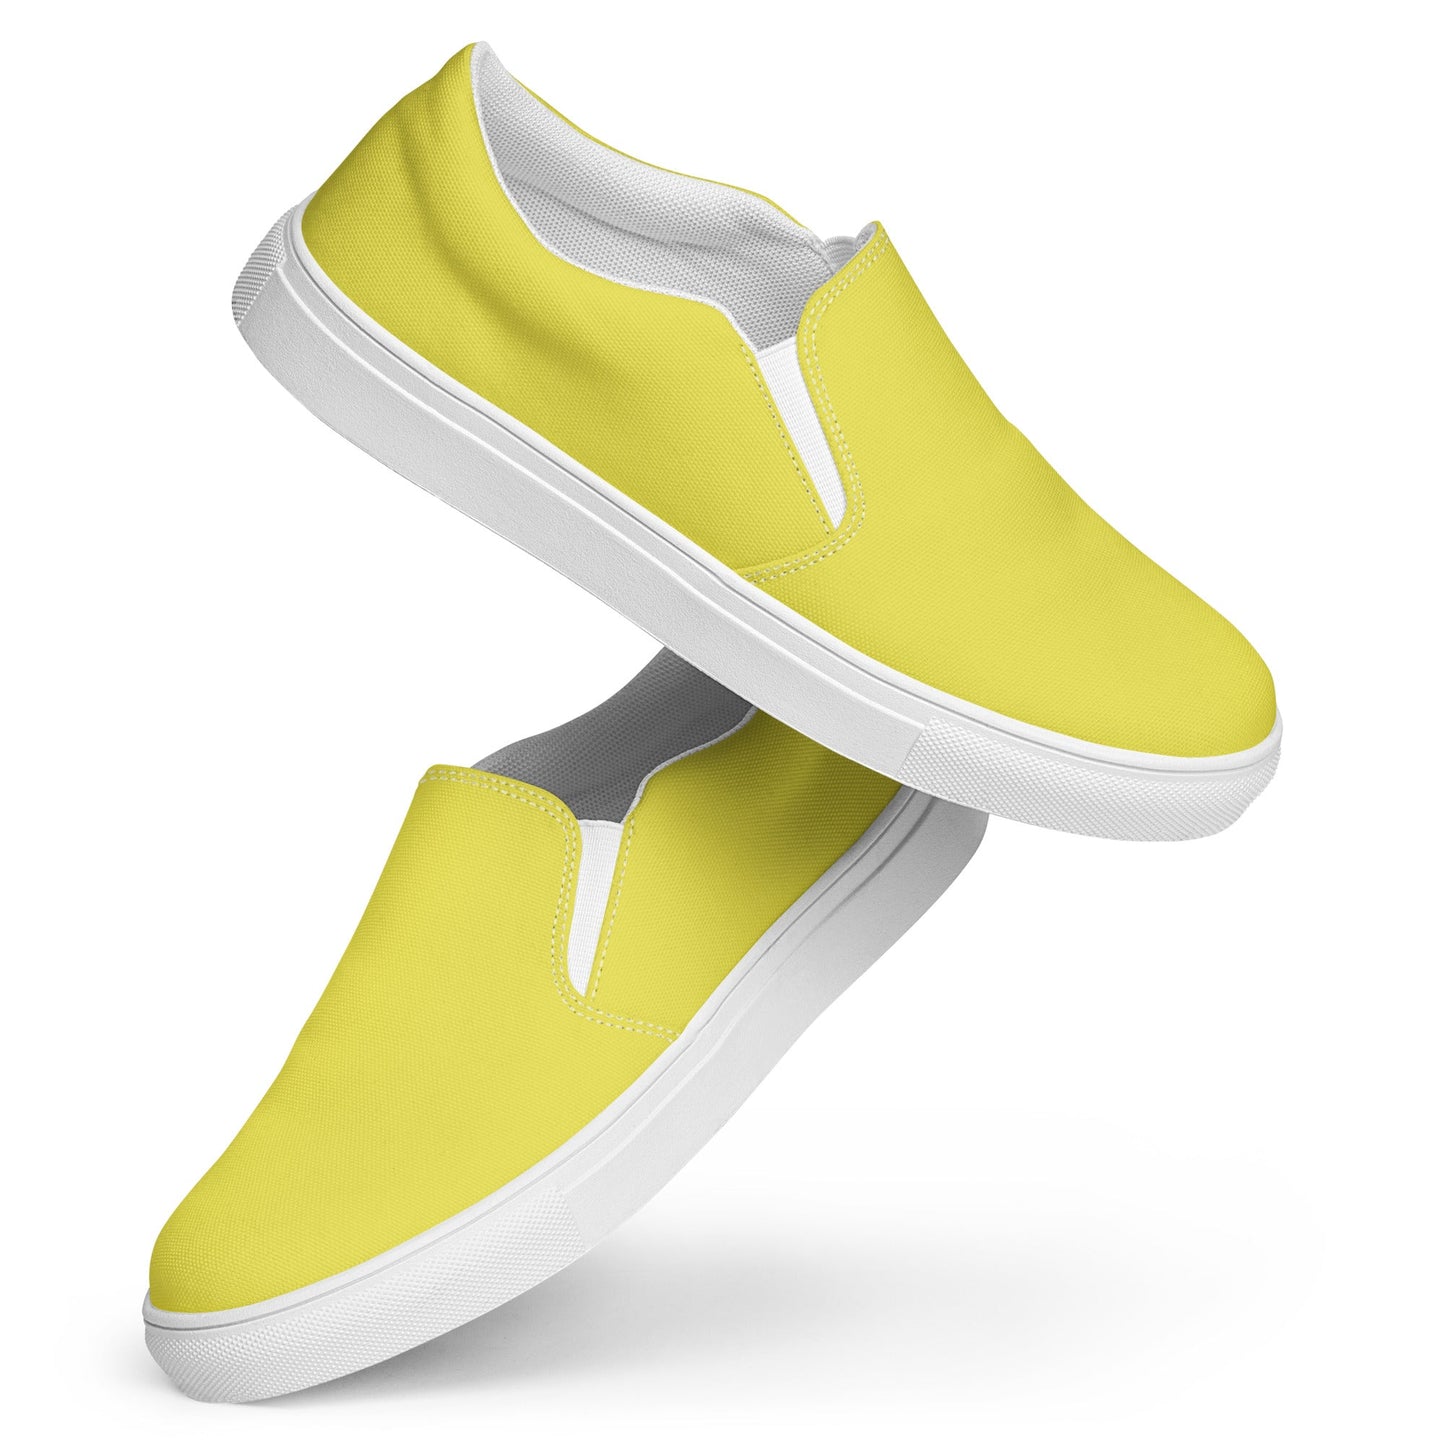 klasneakers Men’s slip-on canvas shoes - Yellow